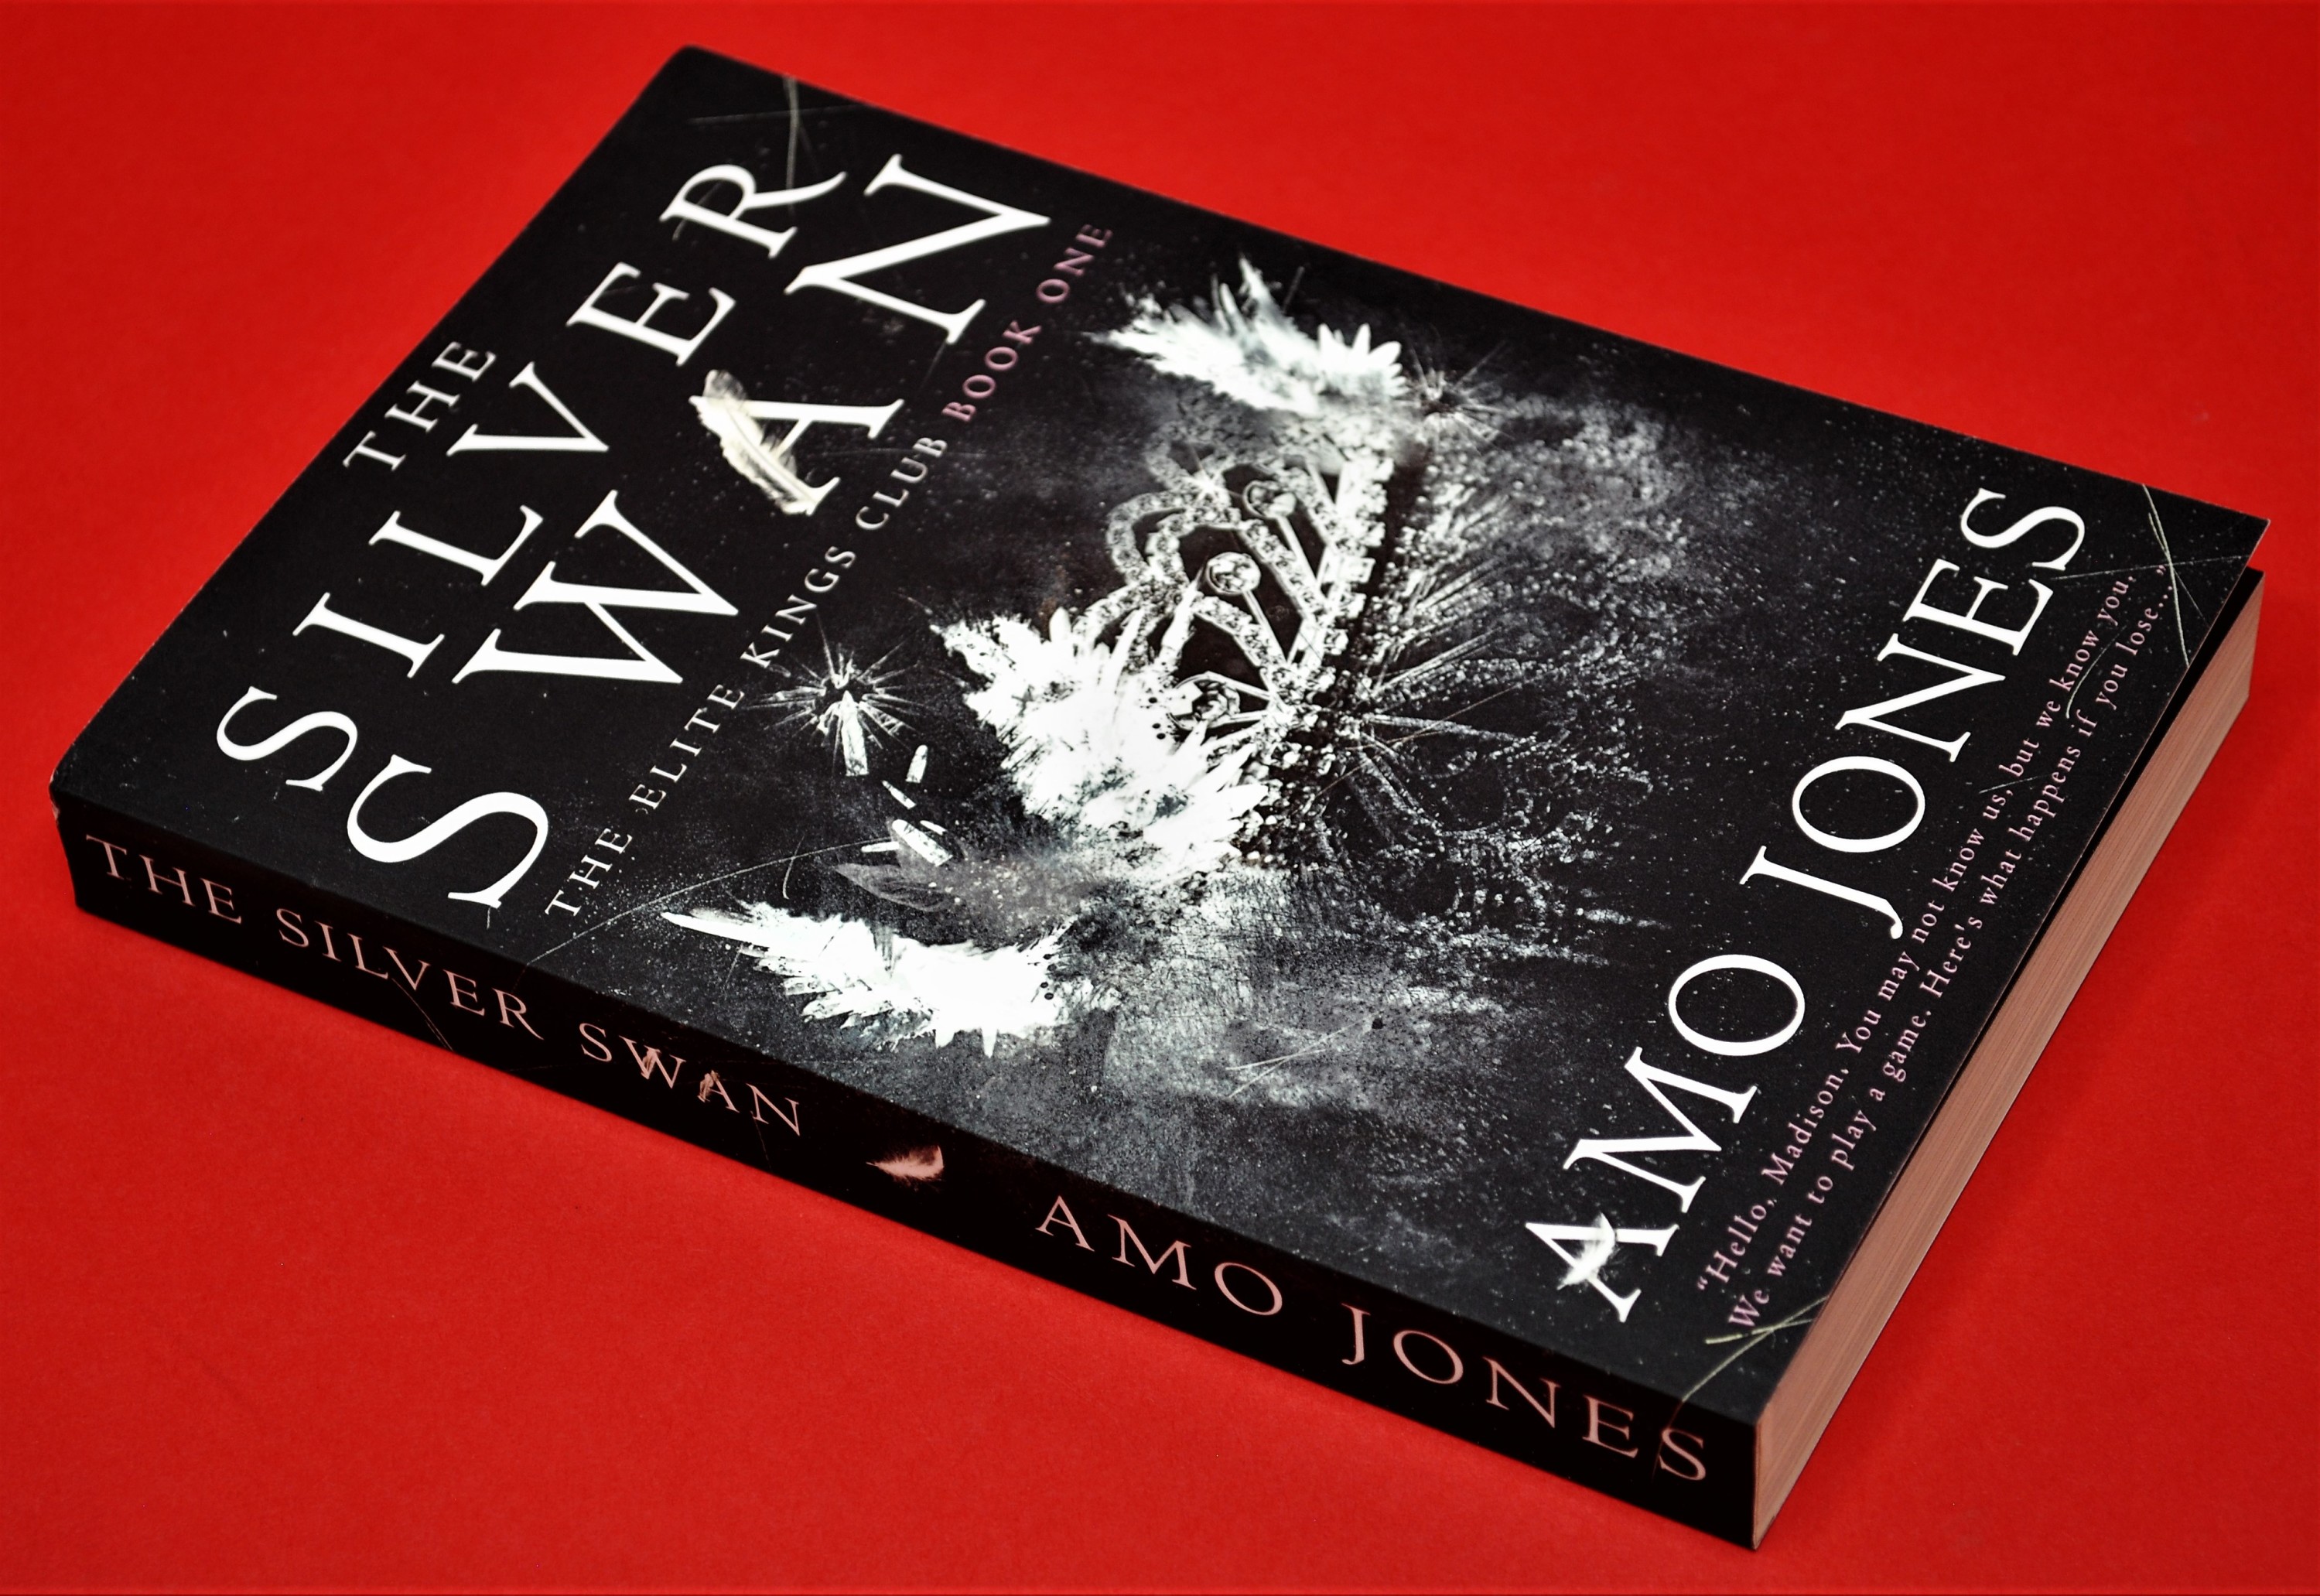 Silver Swan Amo Jones Book Review